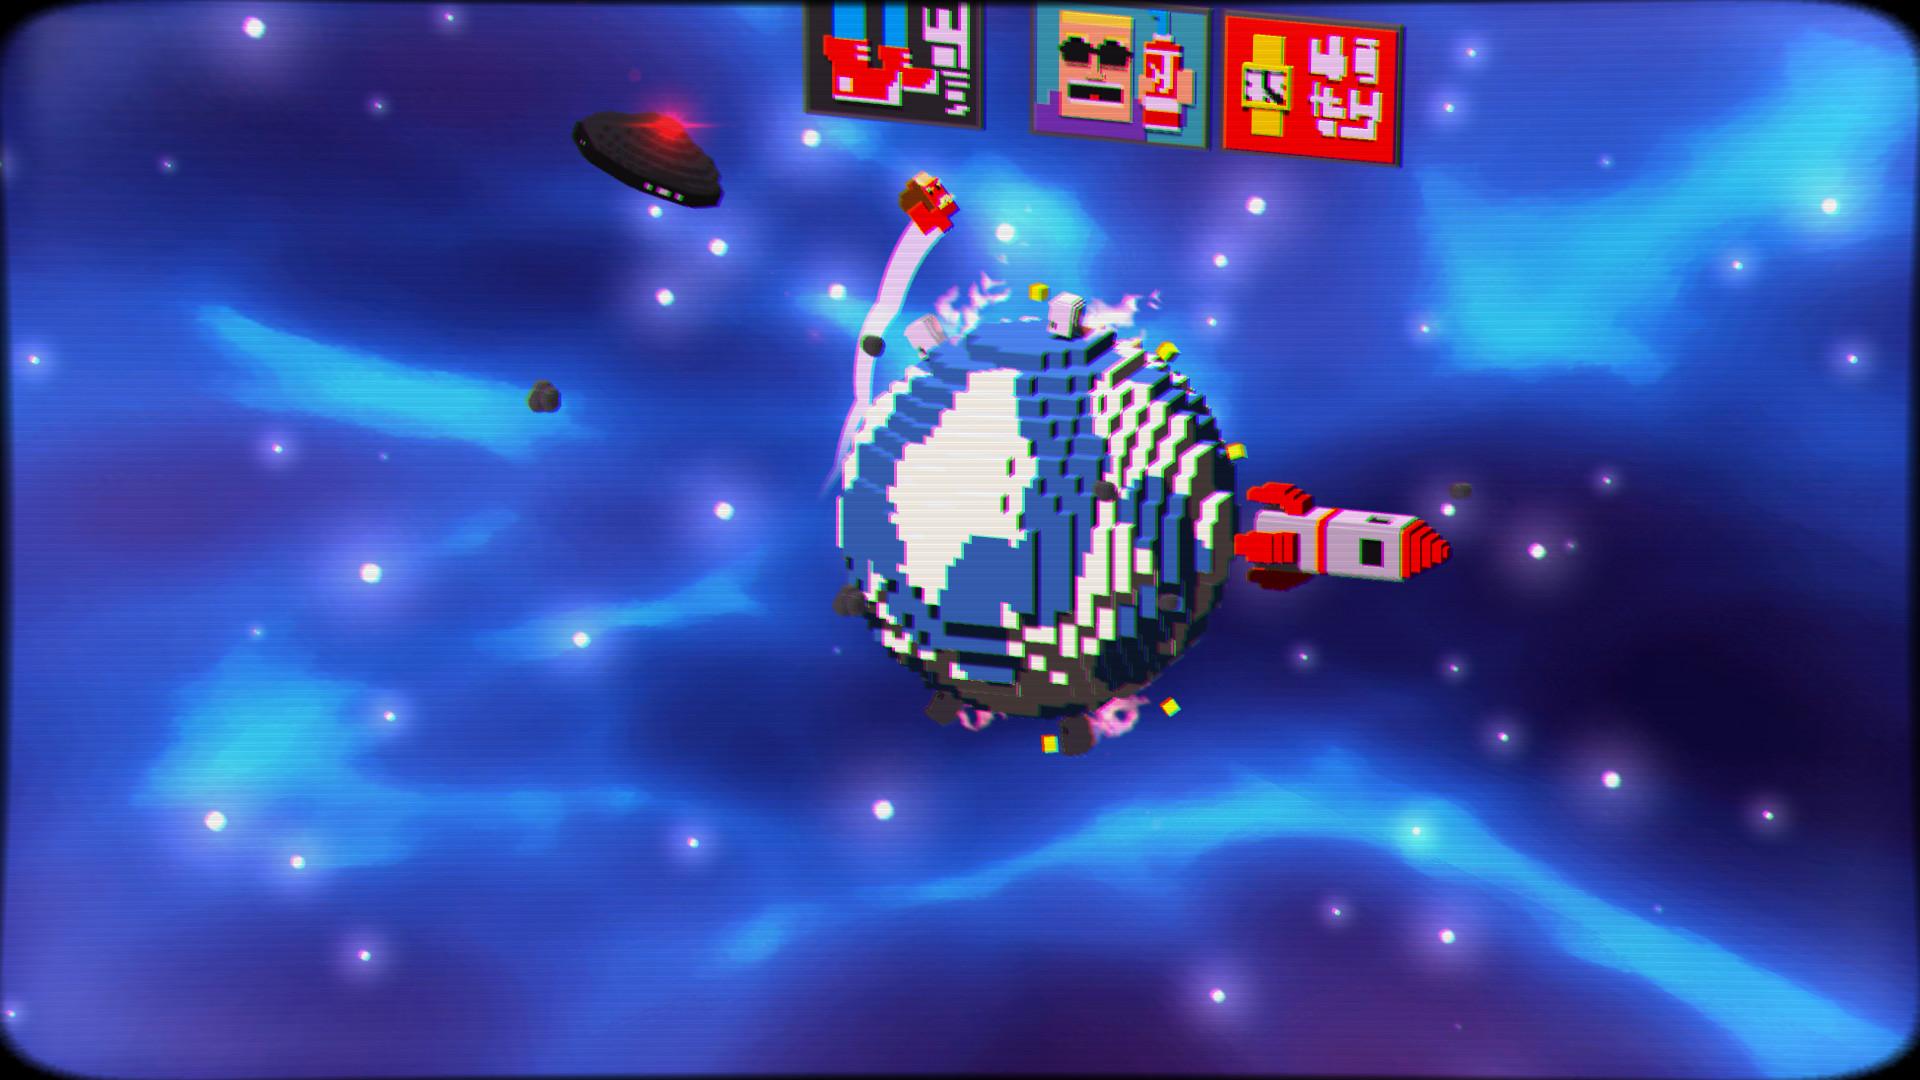 Screenshot №8 from game Cosmic Leap